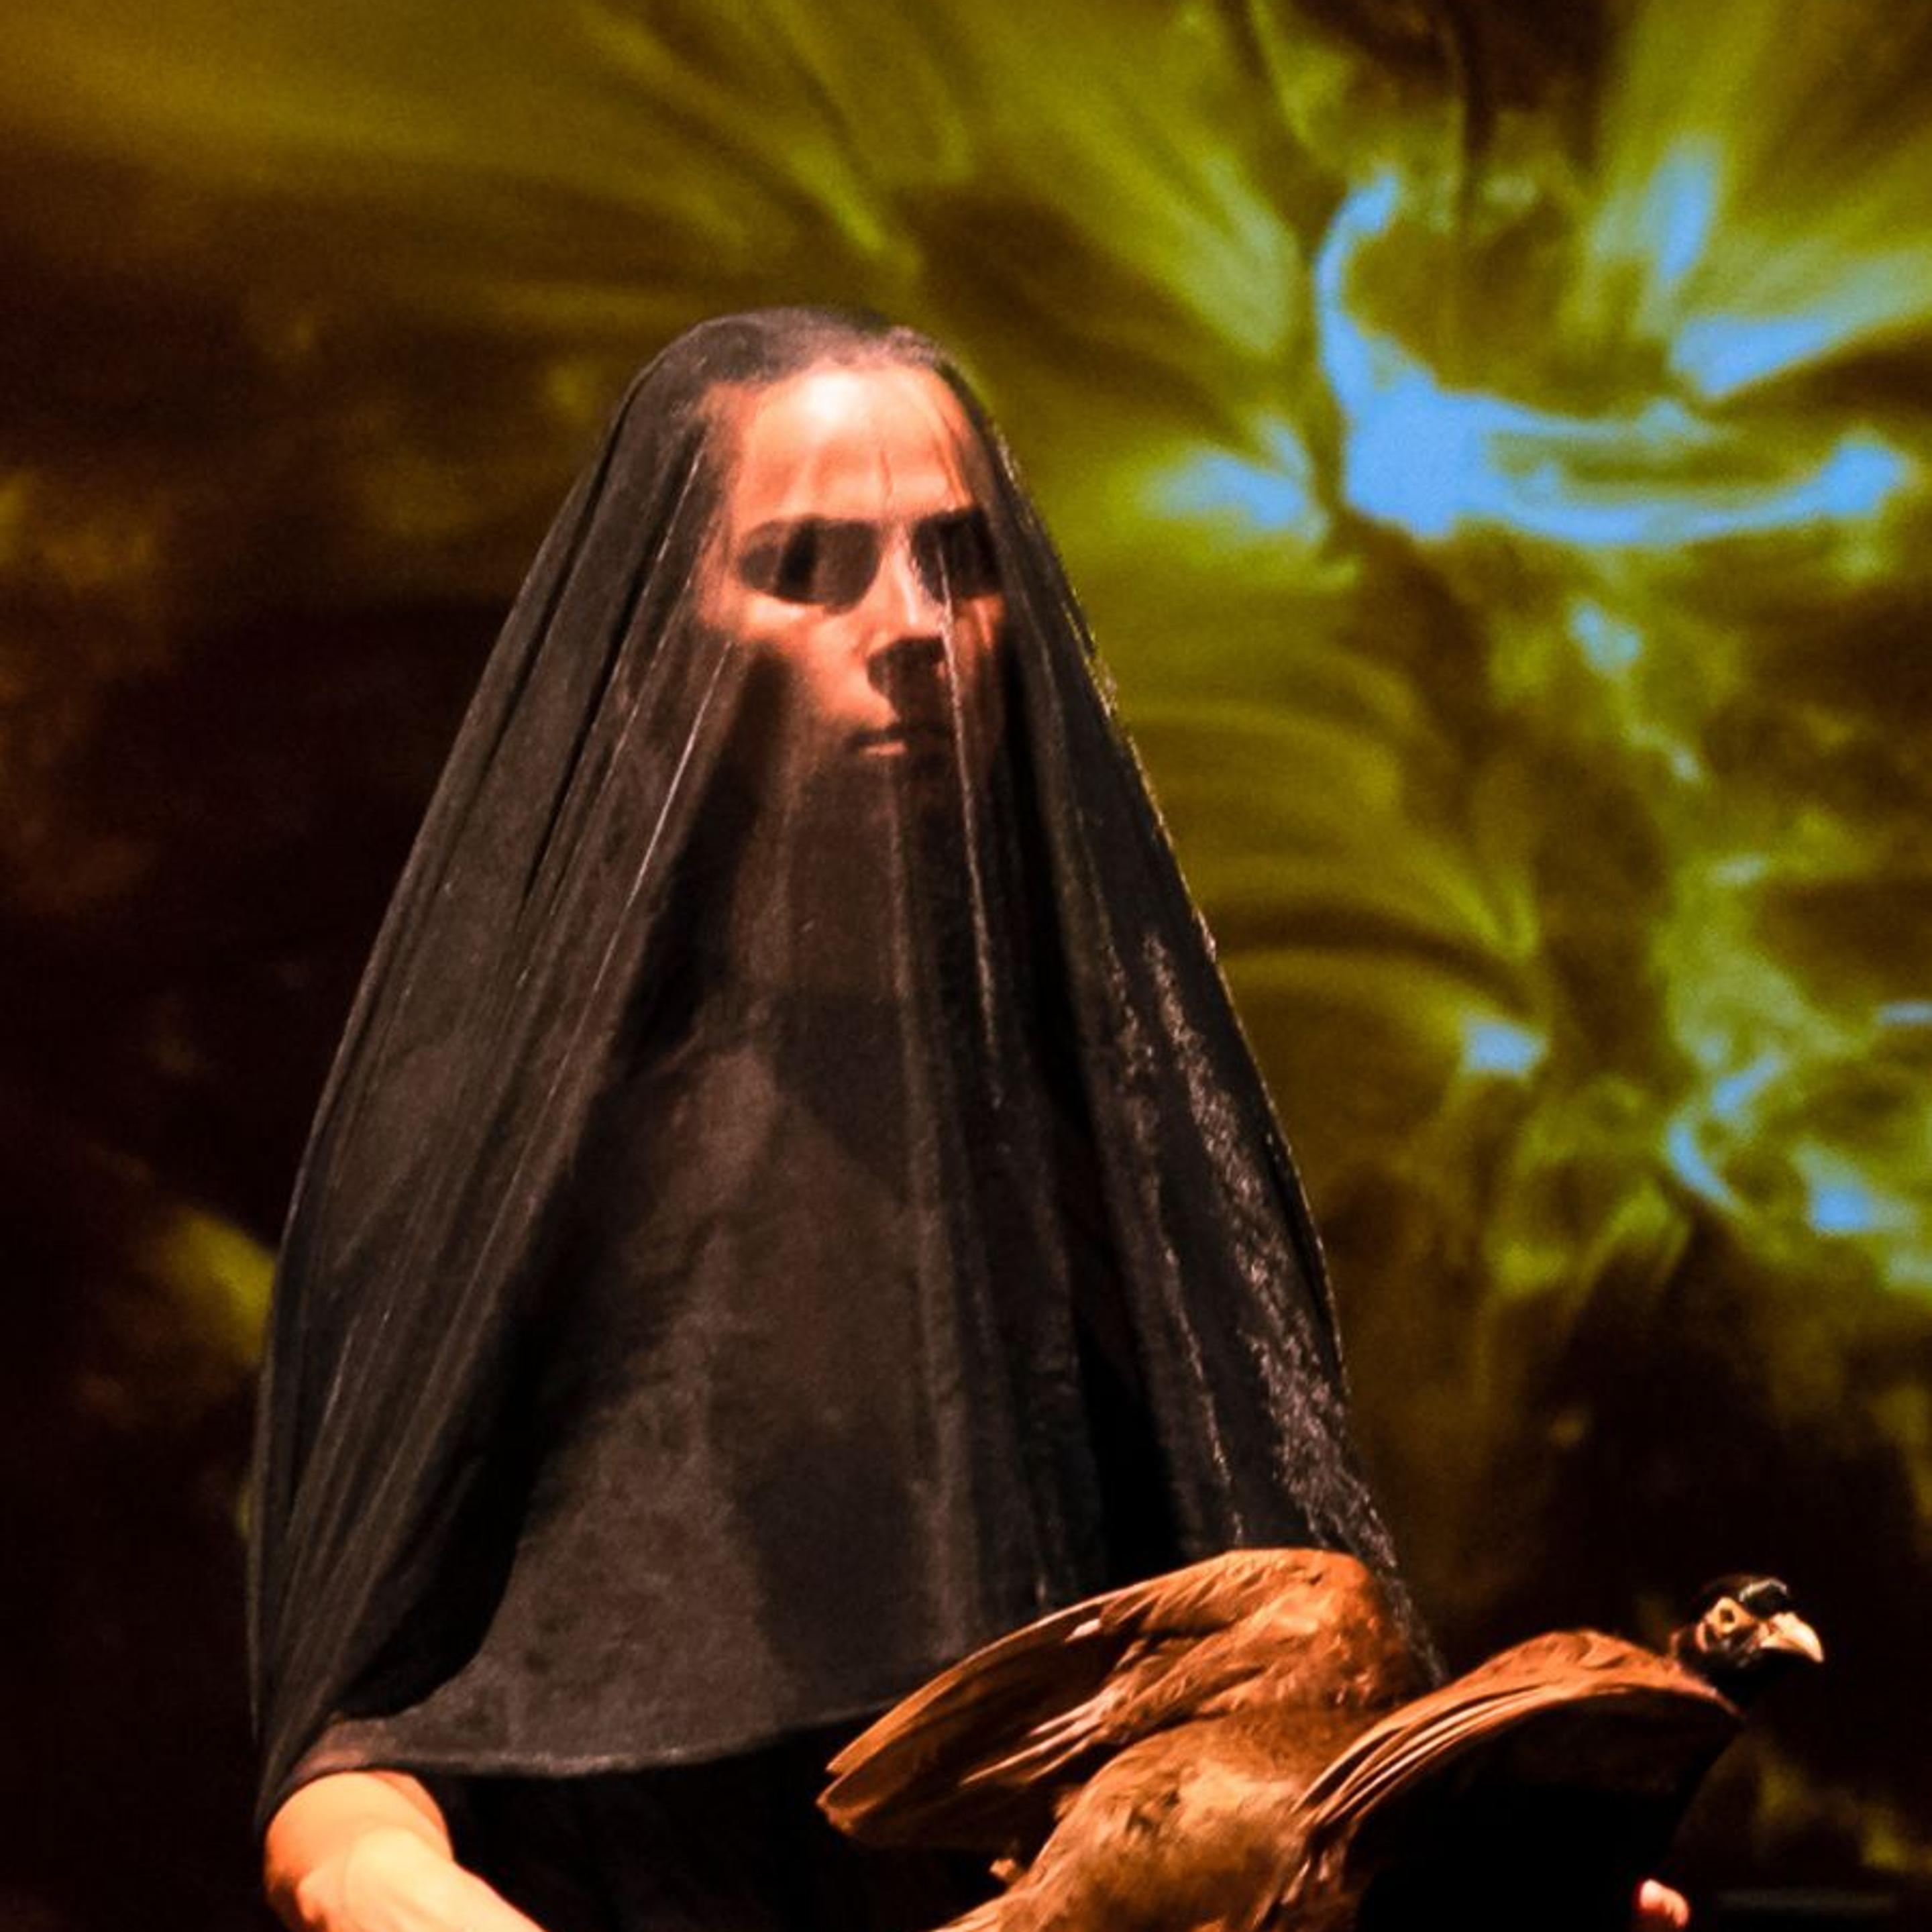 A woman stands in a dark veil, holding an eagle/bird creature. 